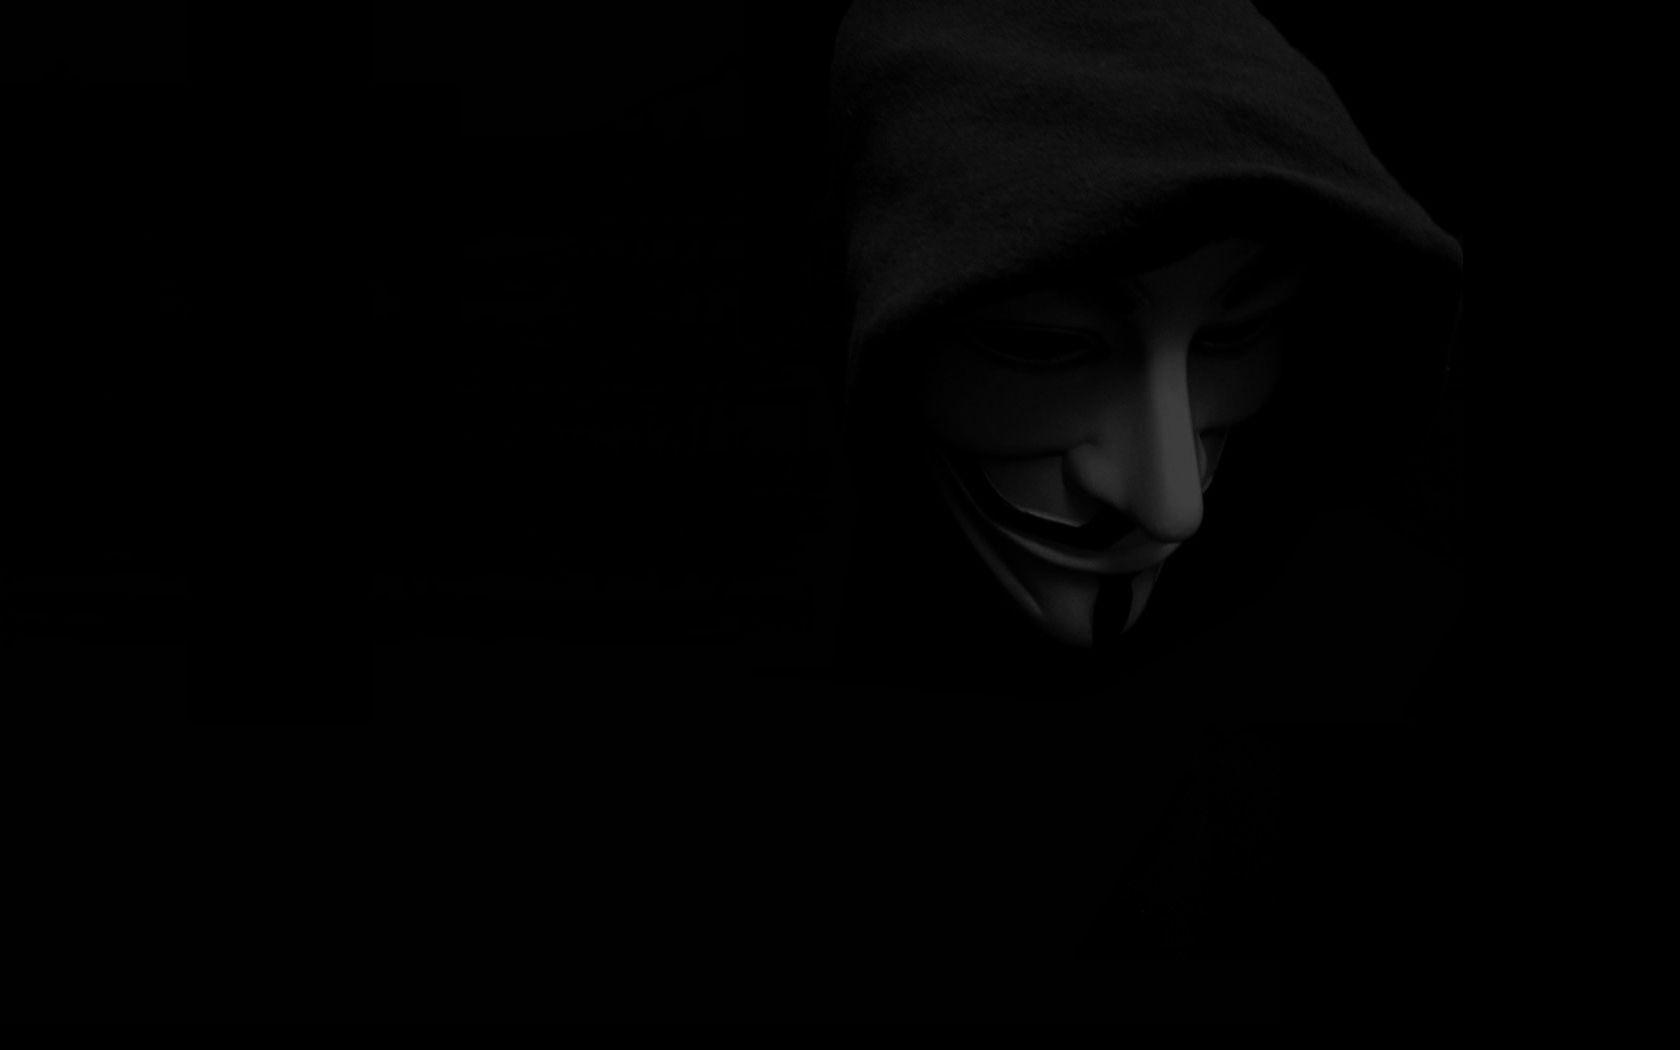 Hacker Anonymous Wallpapers For Desktop 45709 Wallpapers